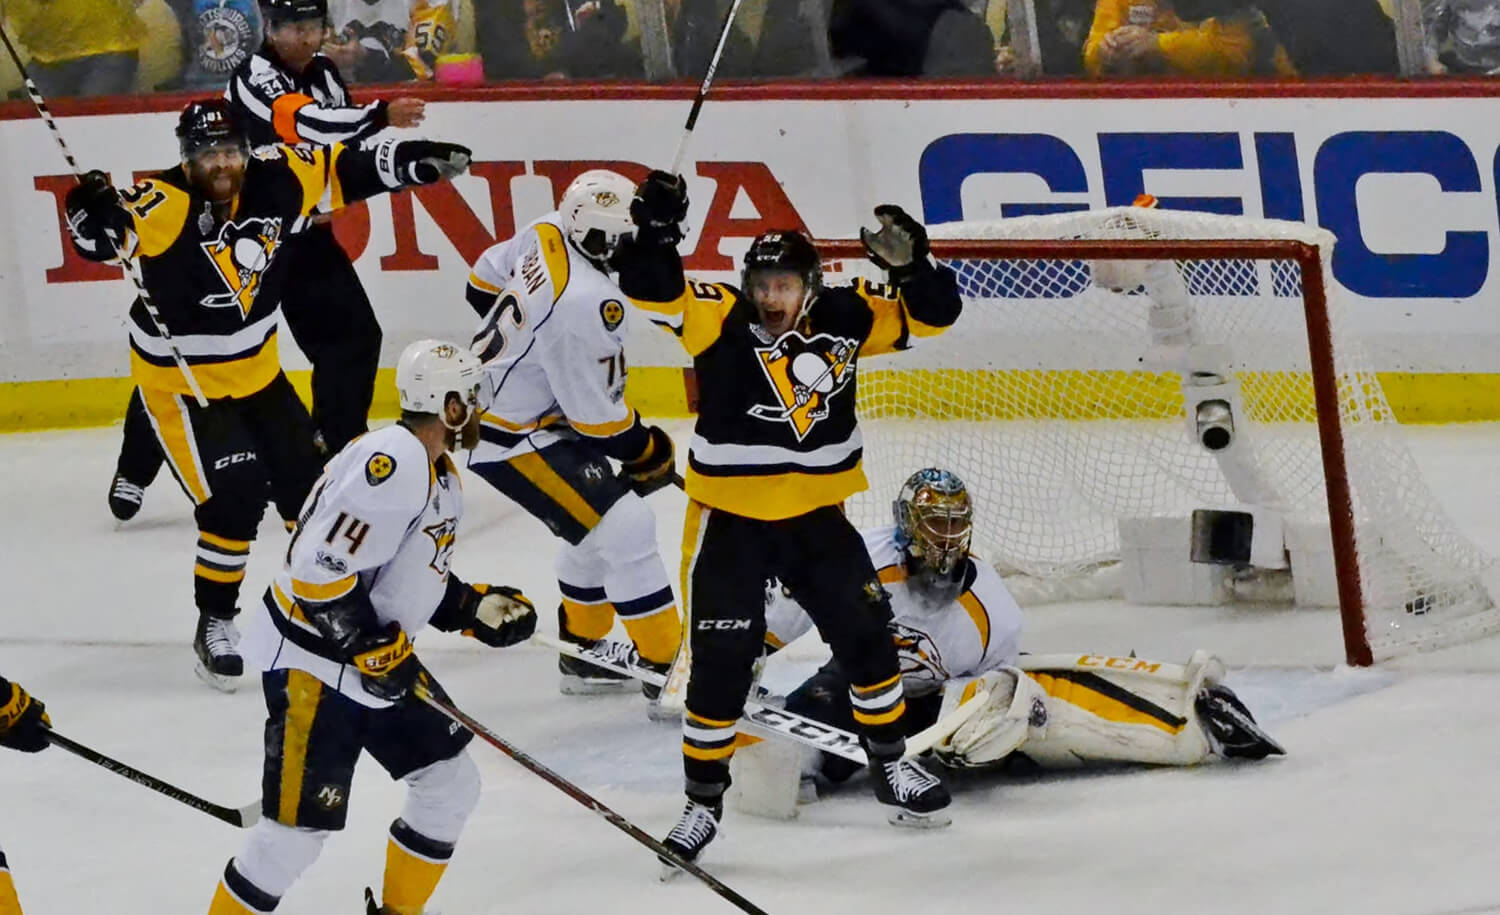 Photo Gallery: Stanley Cup Final – Nashville Predators vs. Pittsburgh Penguins (May 29, 2017)